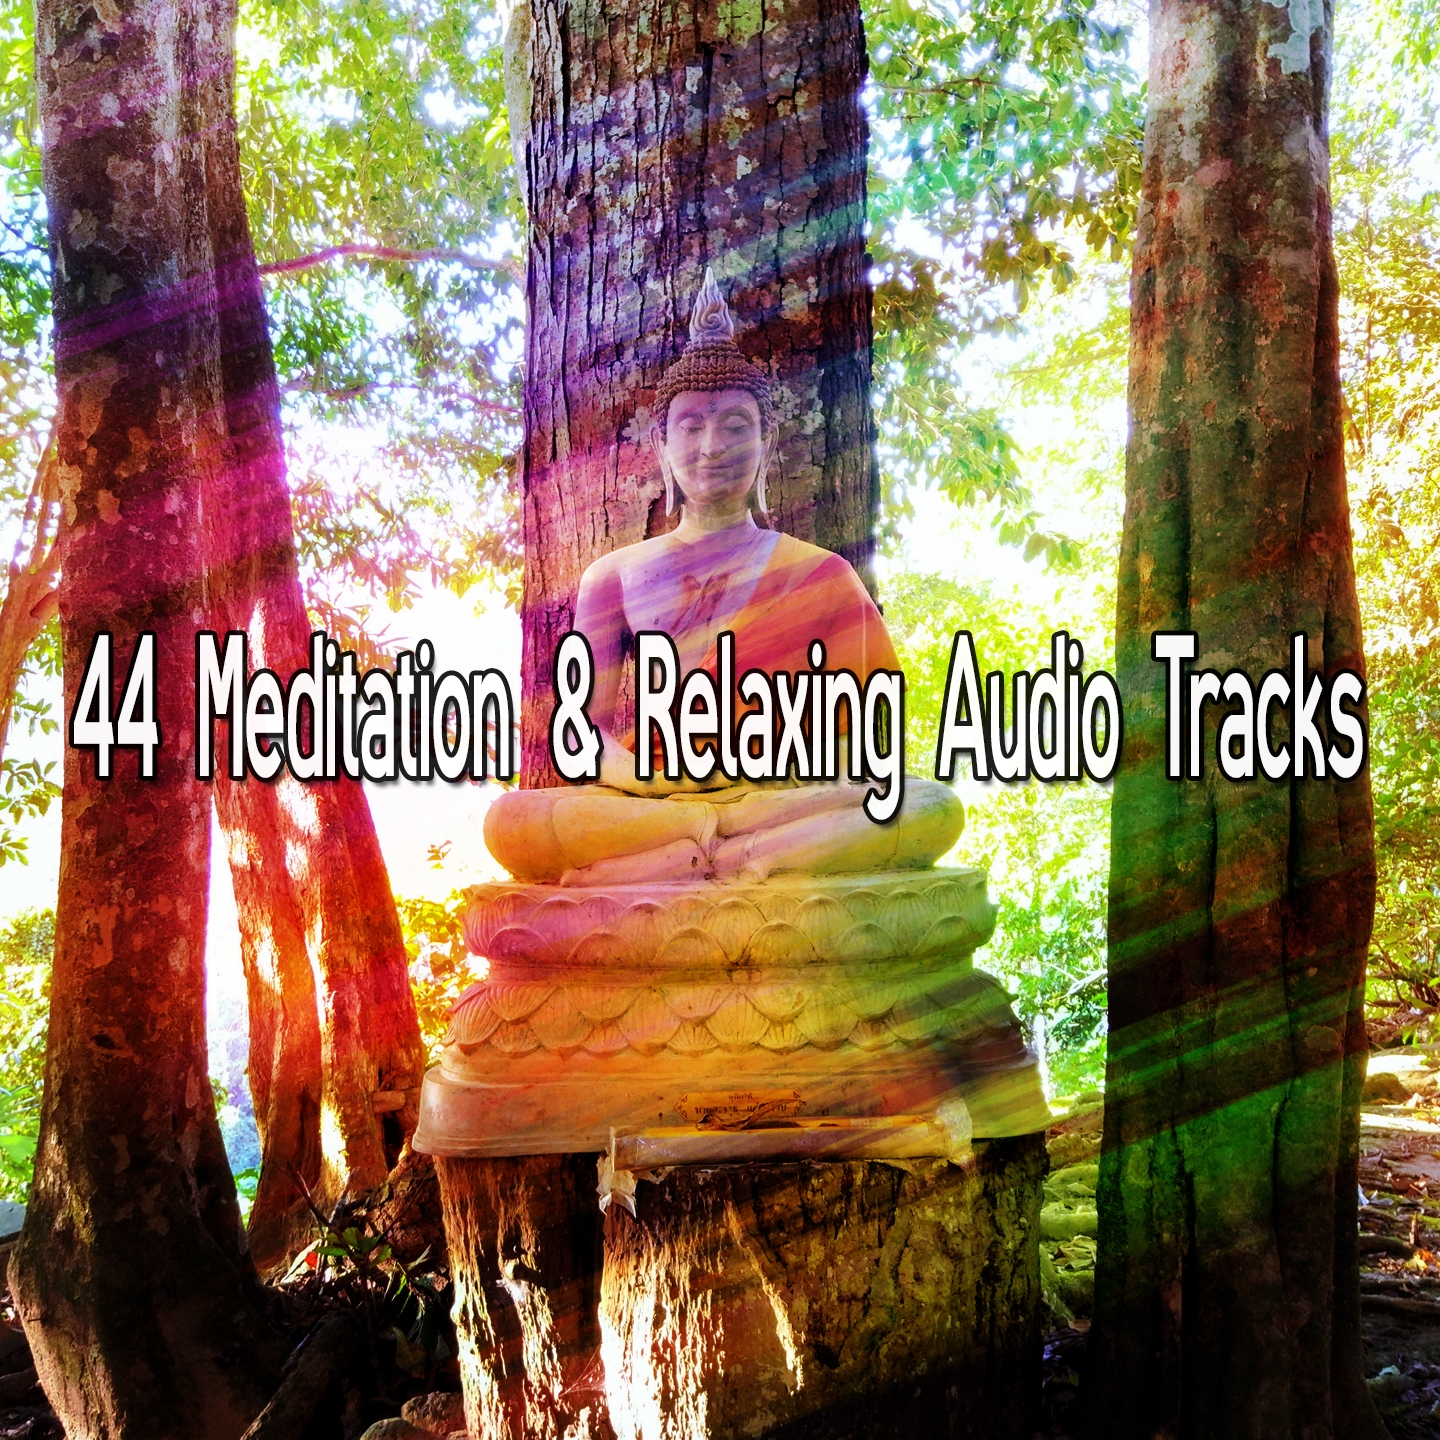 44 Meditation & Relaxing Audio Tracks